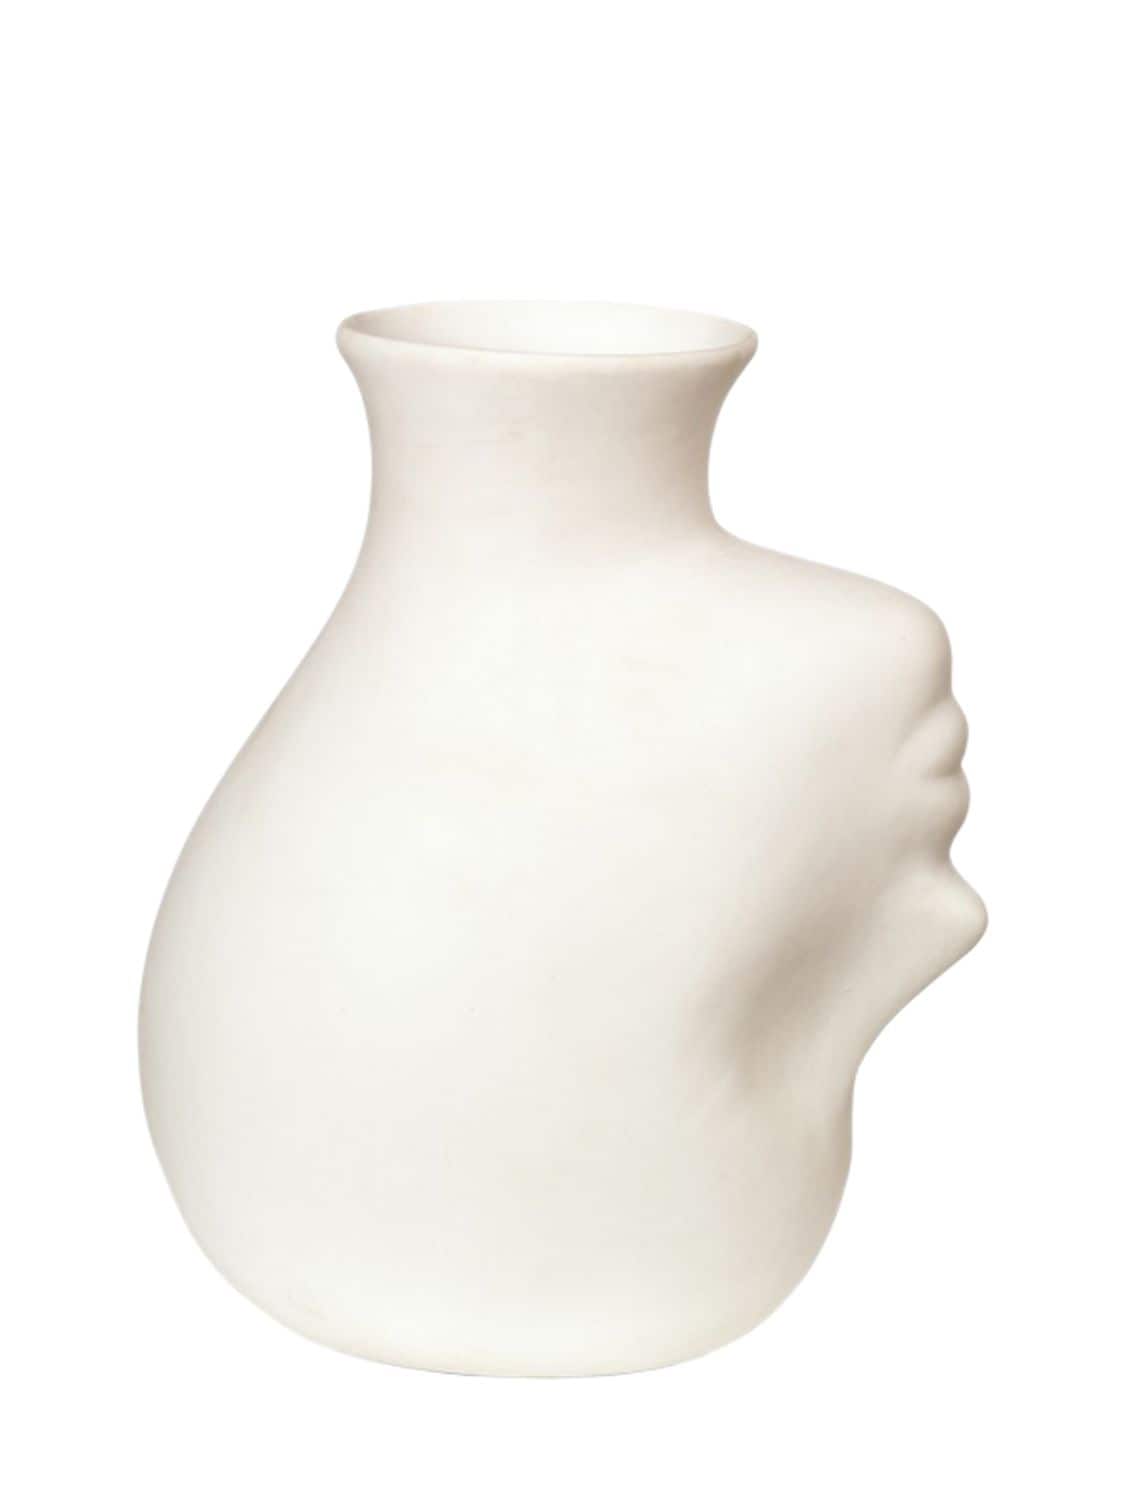 Image of Upside-down Head Vase